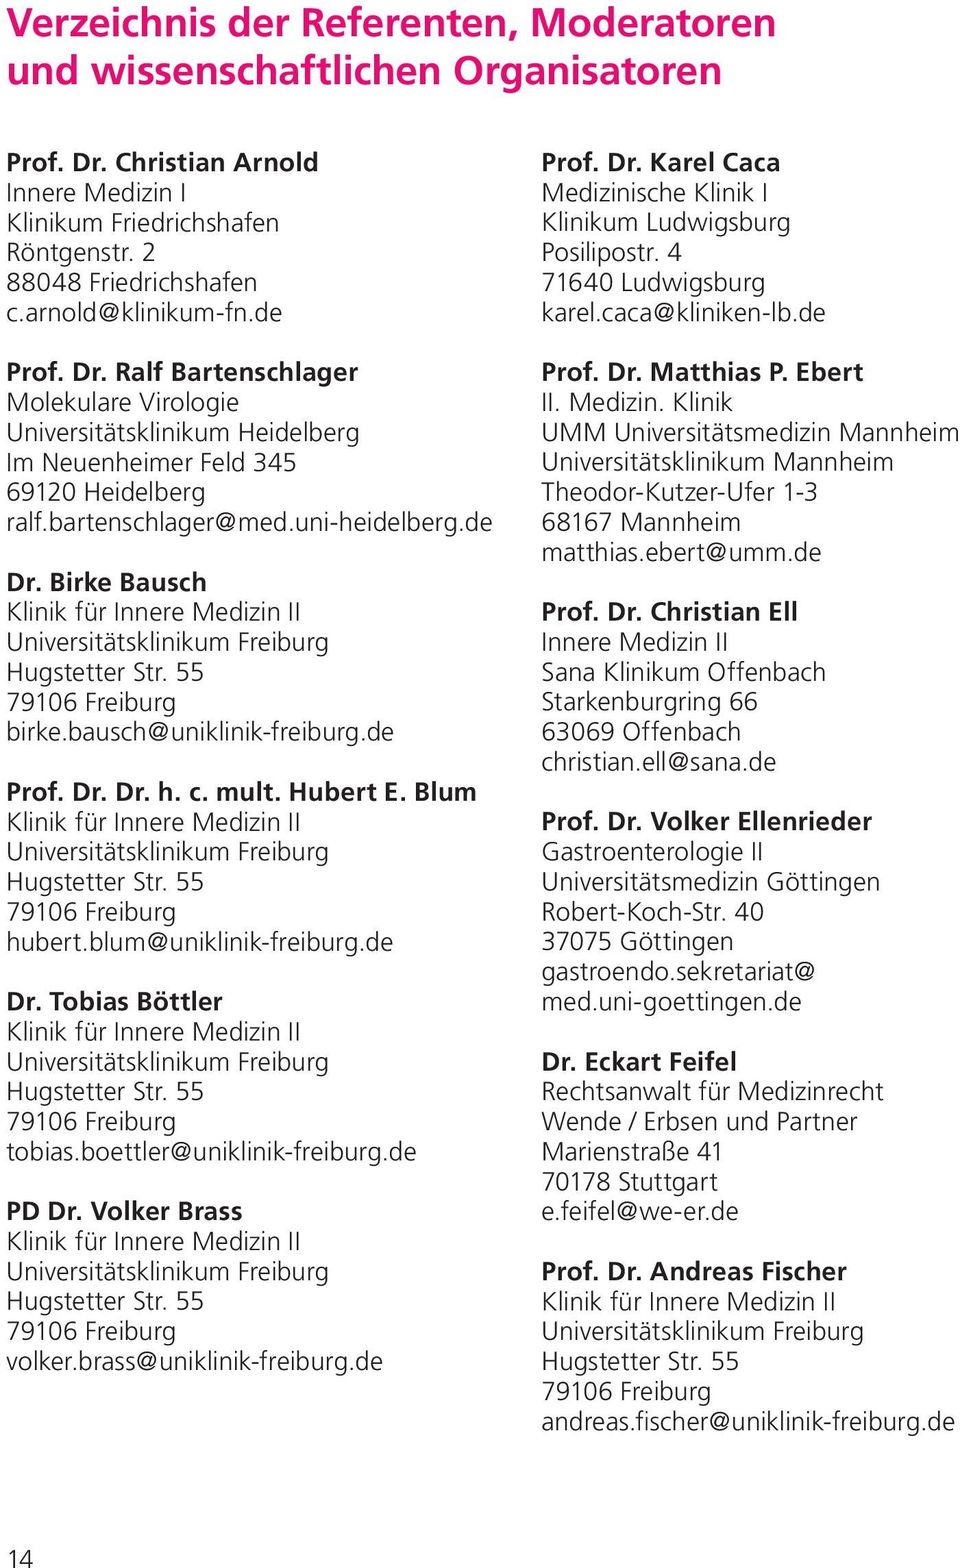 Birke Bausch Universitätsklinikum 79106 birke.bausch@uniklinik-freiburg.de Prof. Dr. Dr. h. c. mult. Hubert E. Blum Universitätsklinikum 79106 hubert.blum@uniklinik-freiburg.de Dr.